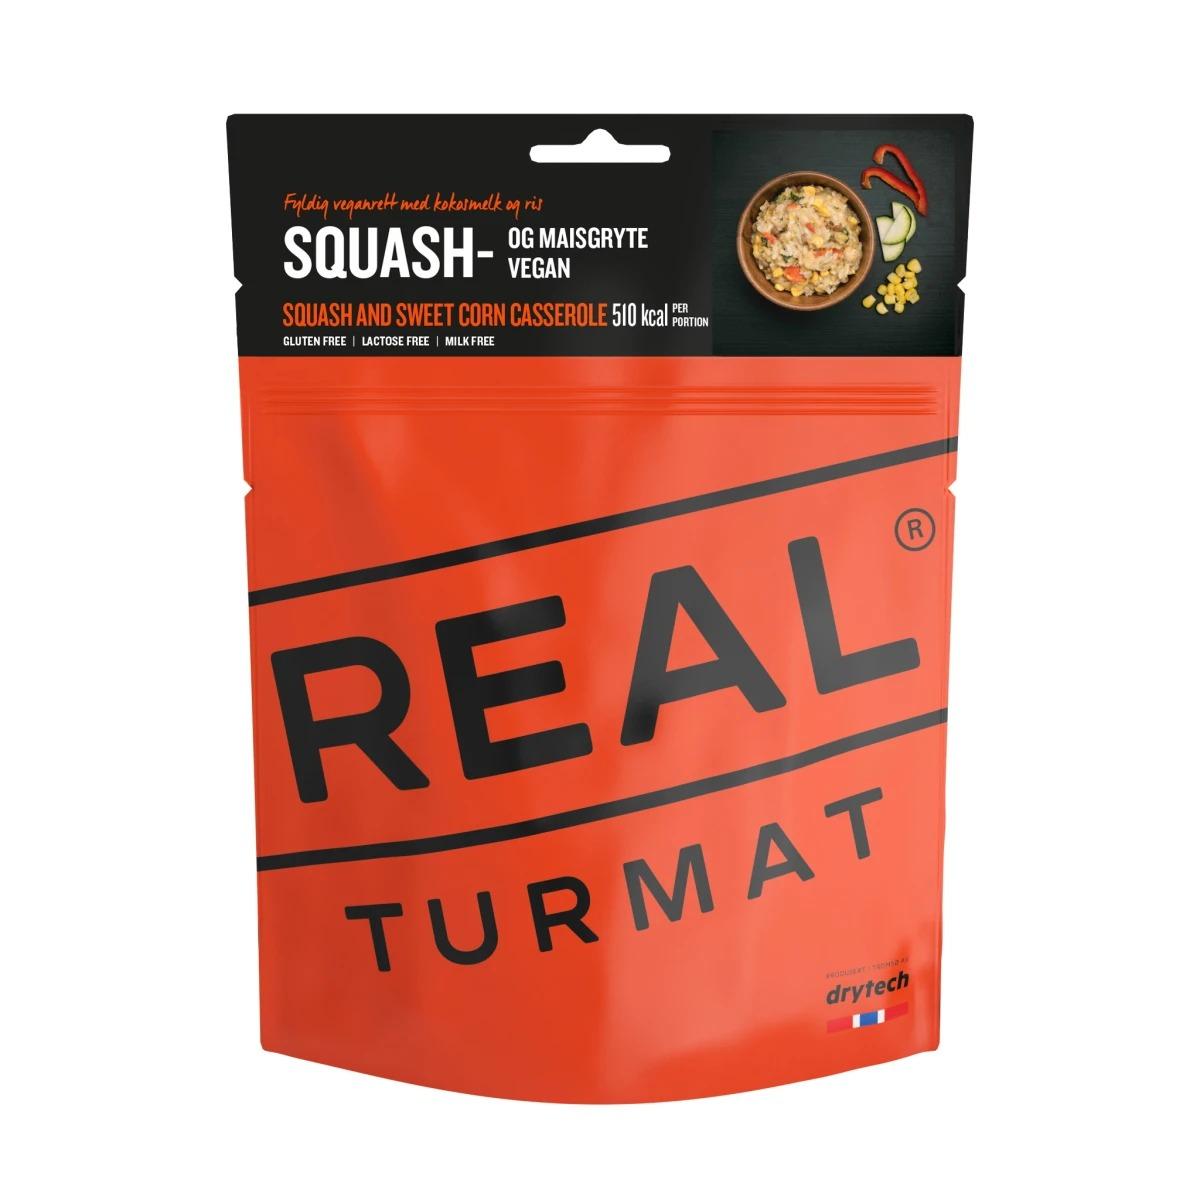 Real Turmat Squash- og Maisgryte. (Vegan)